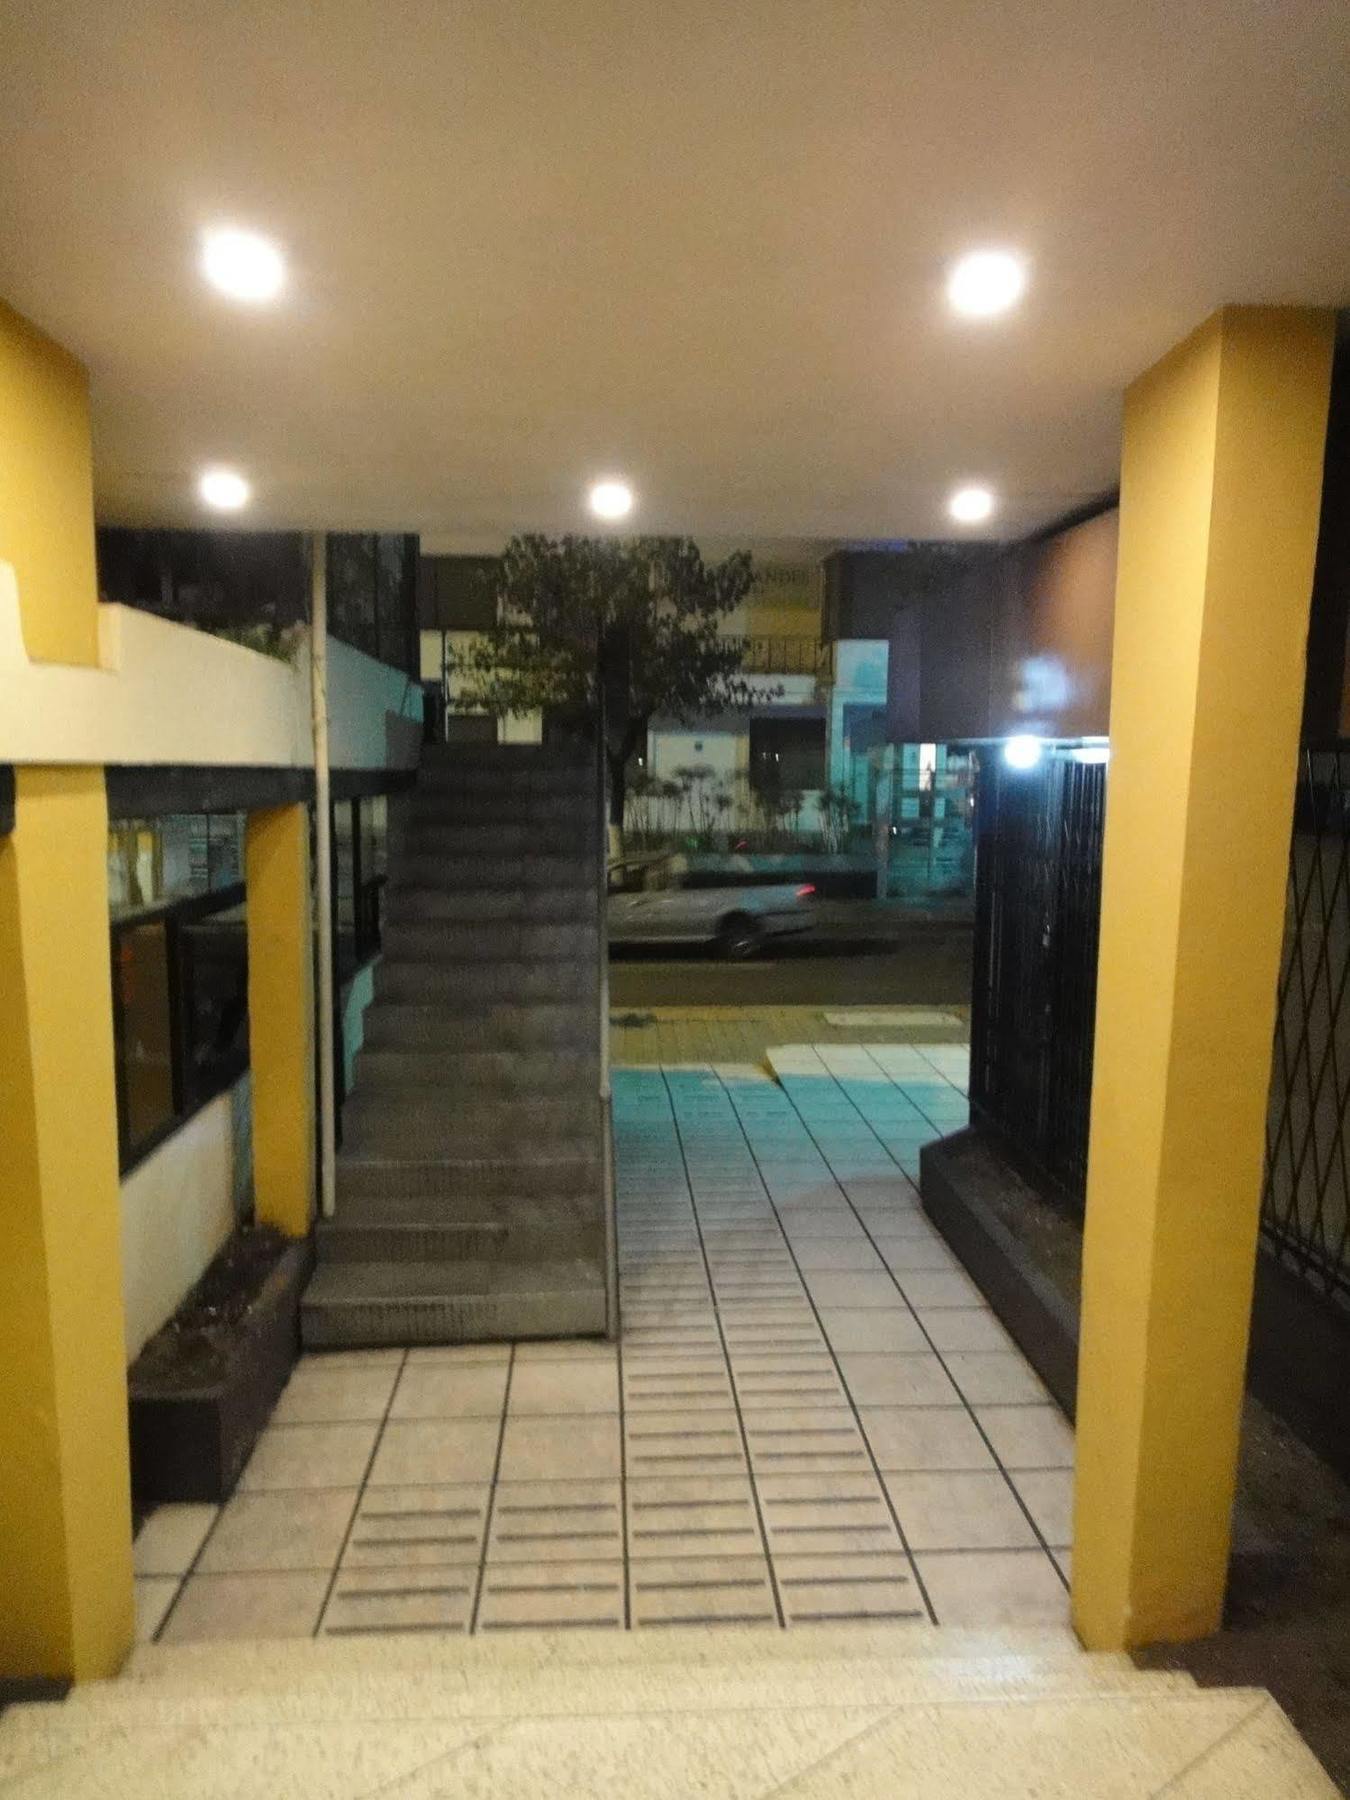 Alston Inn Hotel Quito Exterior foto